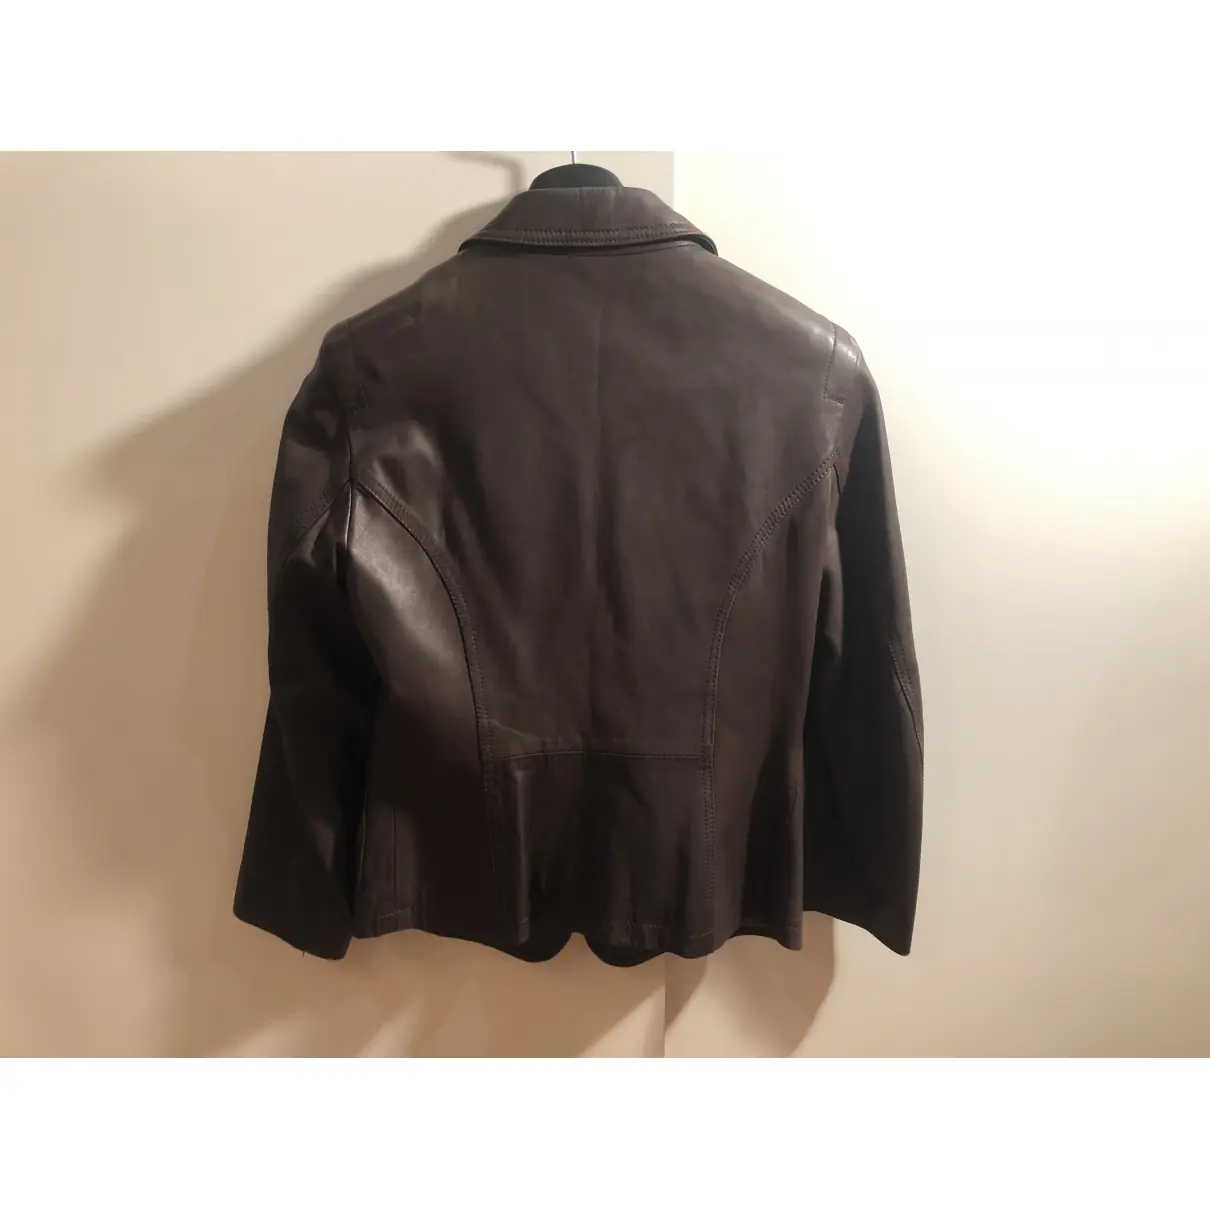 Brooksfield Leather short vest for sale